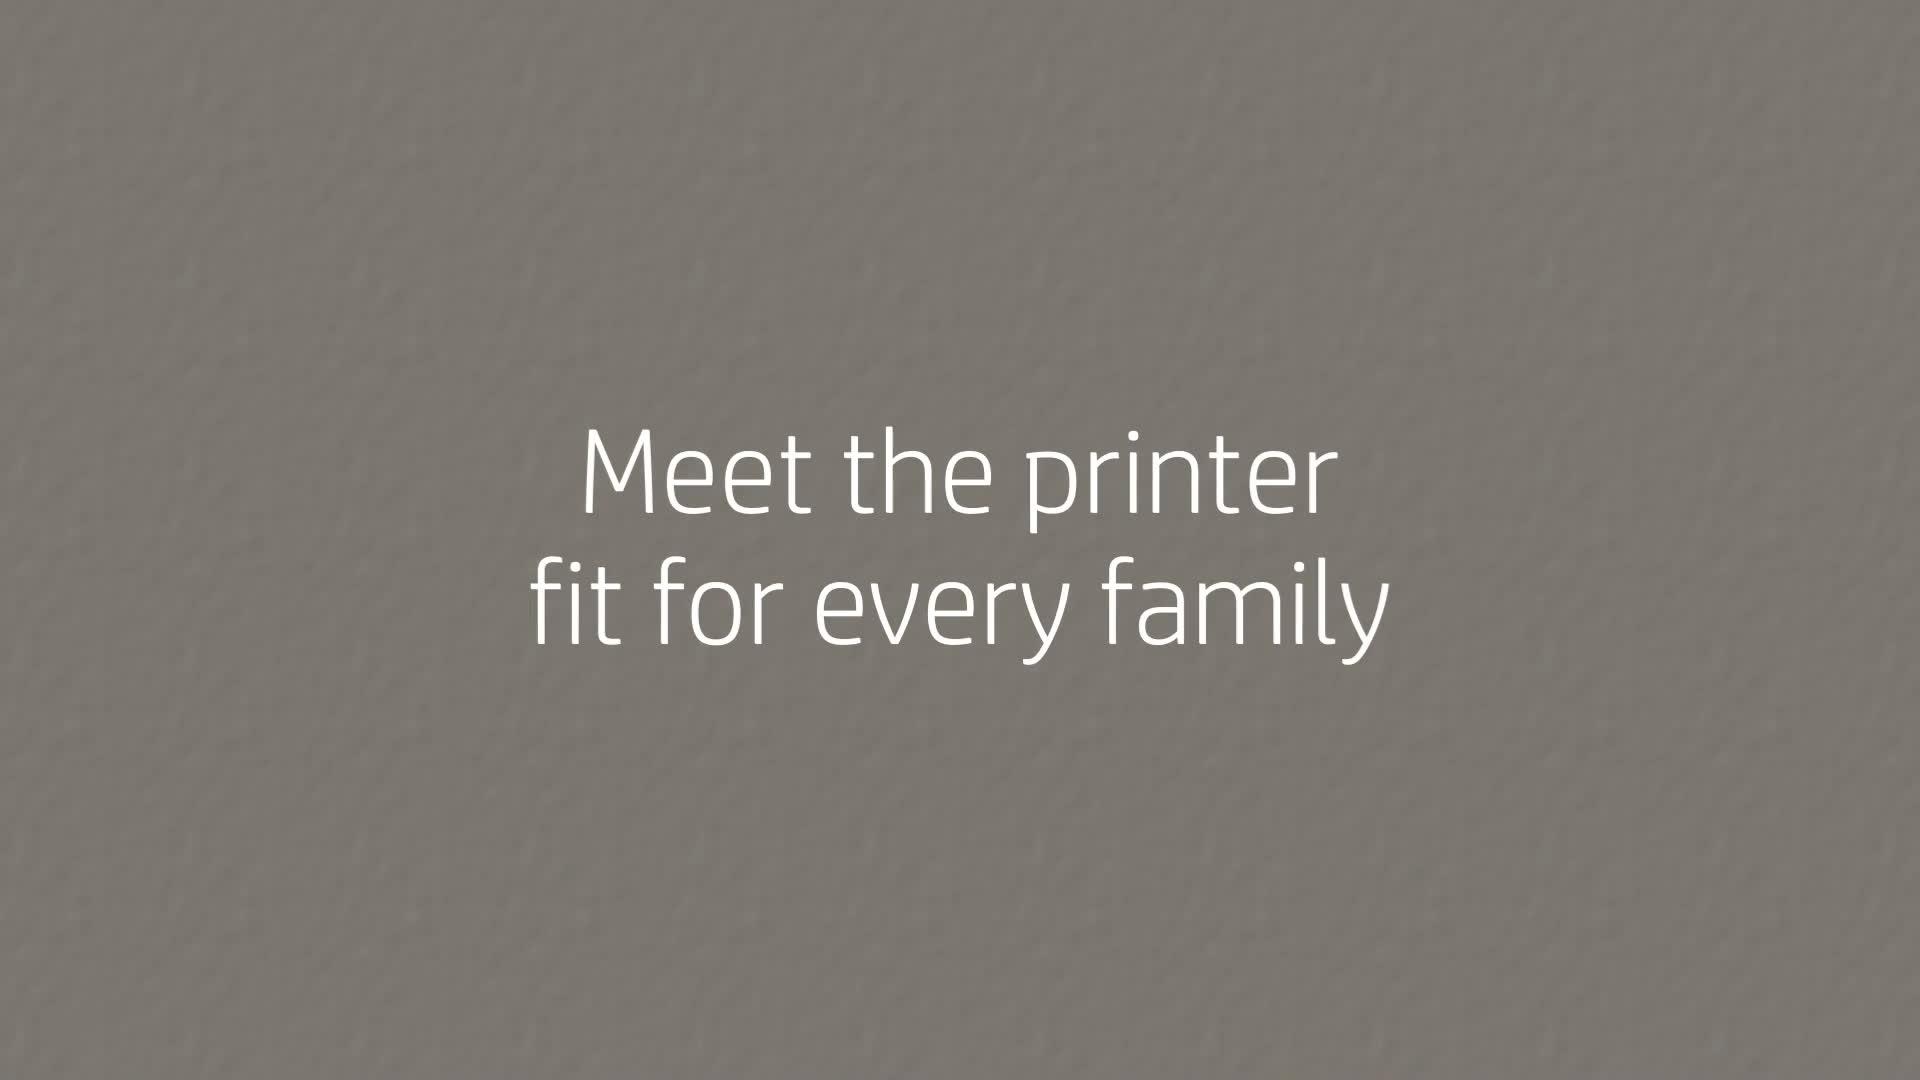 HP Envy Inspire 7220E All In One Printer